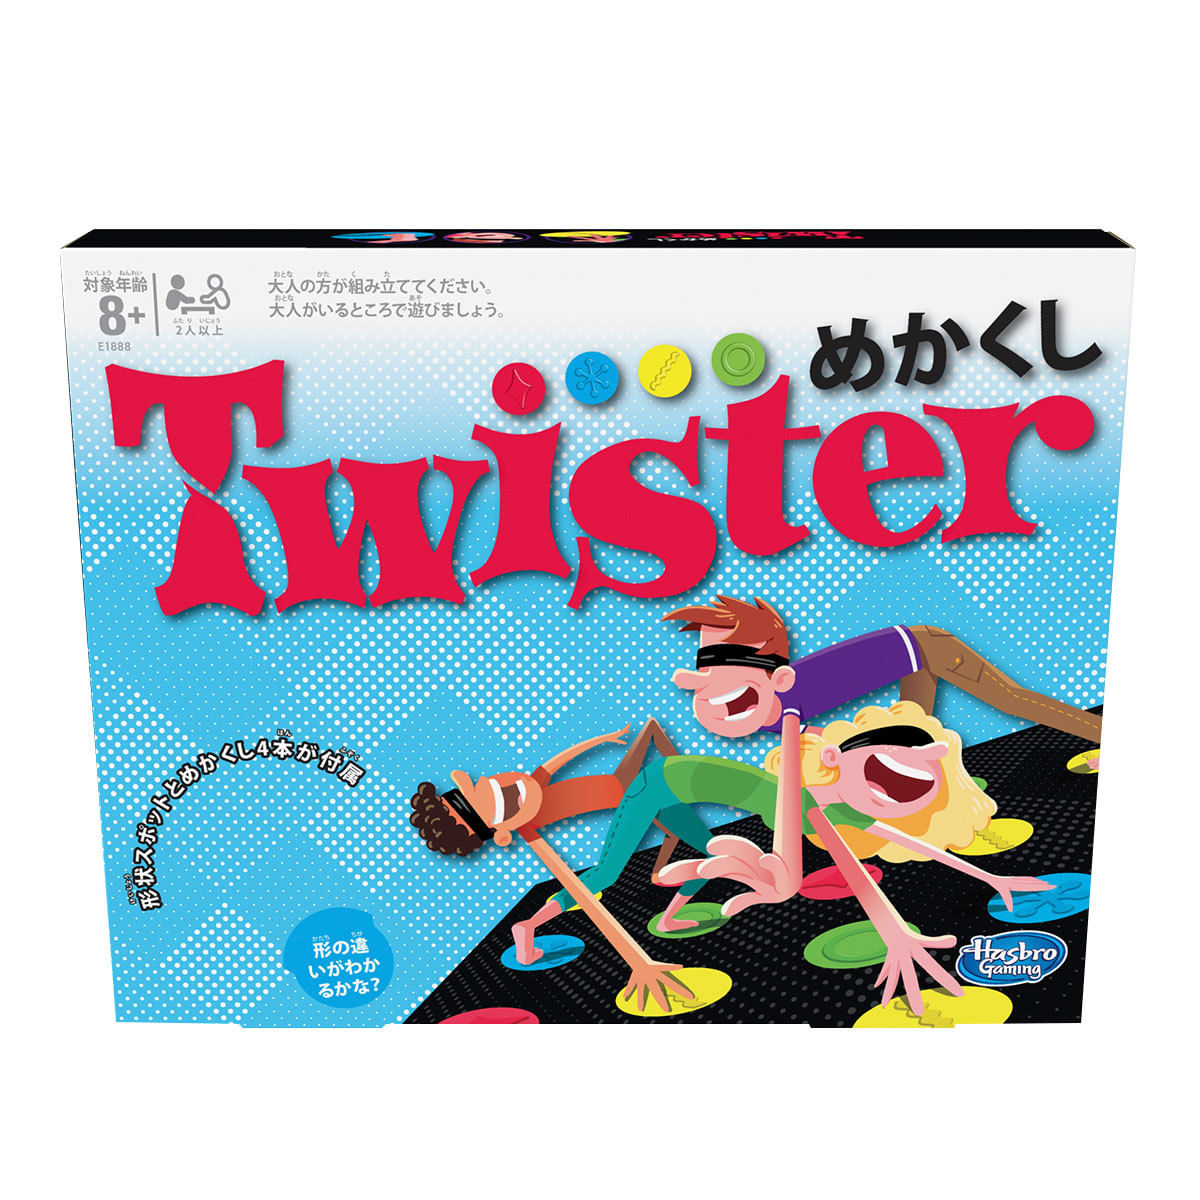 Jogo Twister - Hasbro